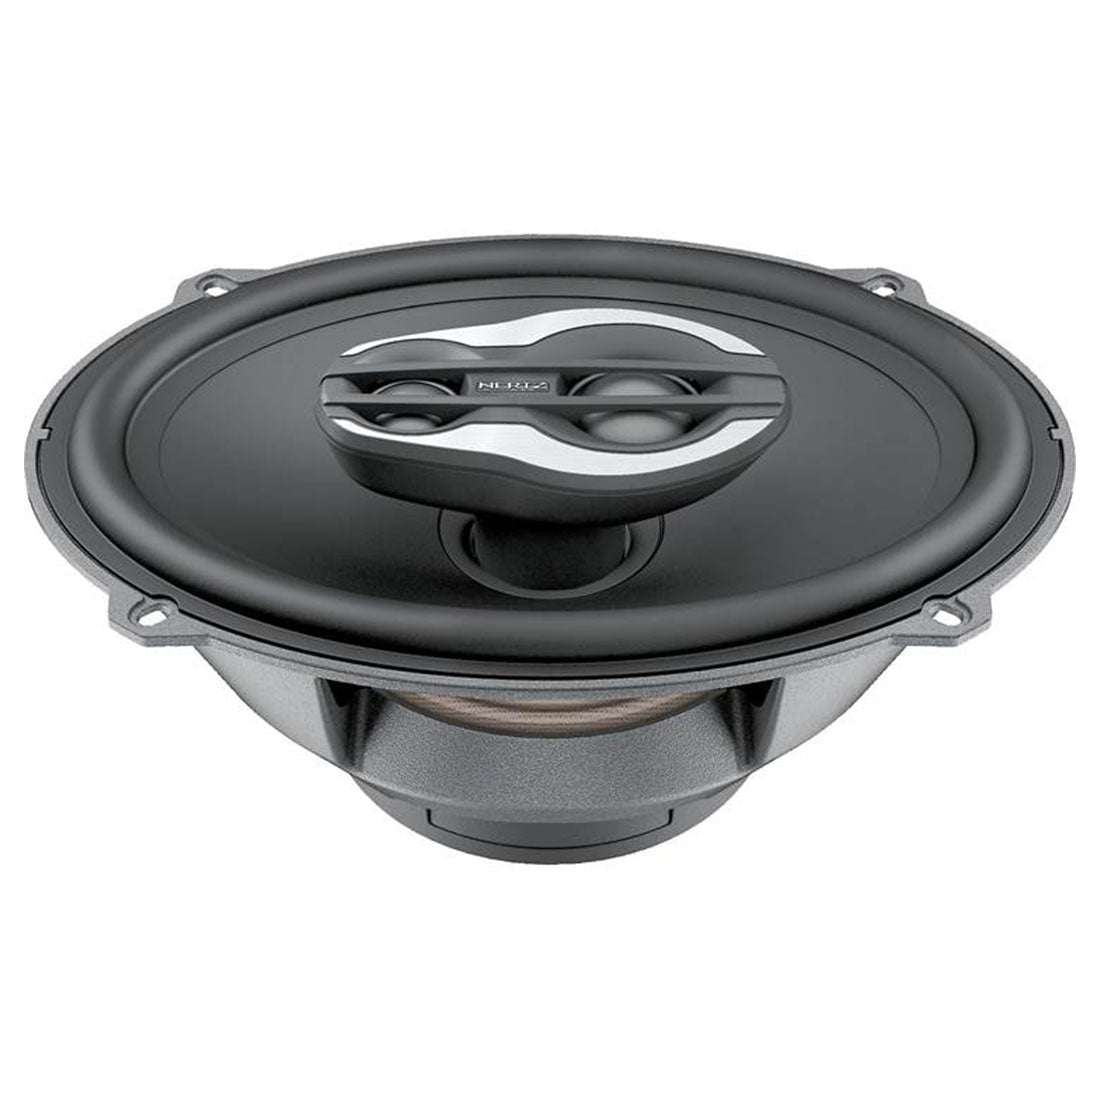 Hertz MPX165.3 6.5" 3-Way Coaxial Car Speakers